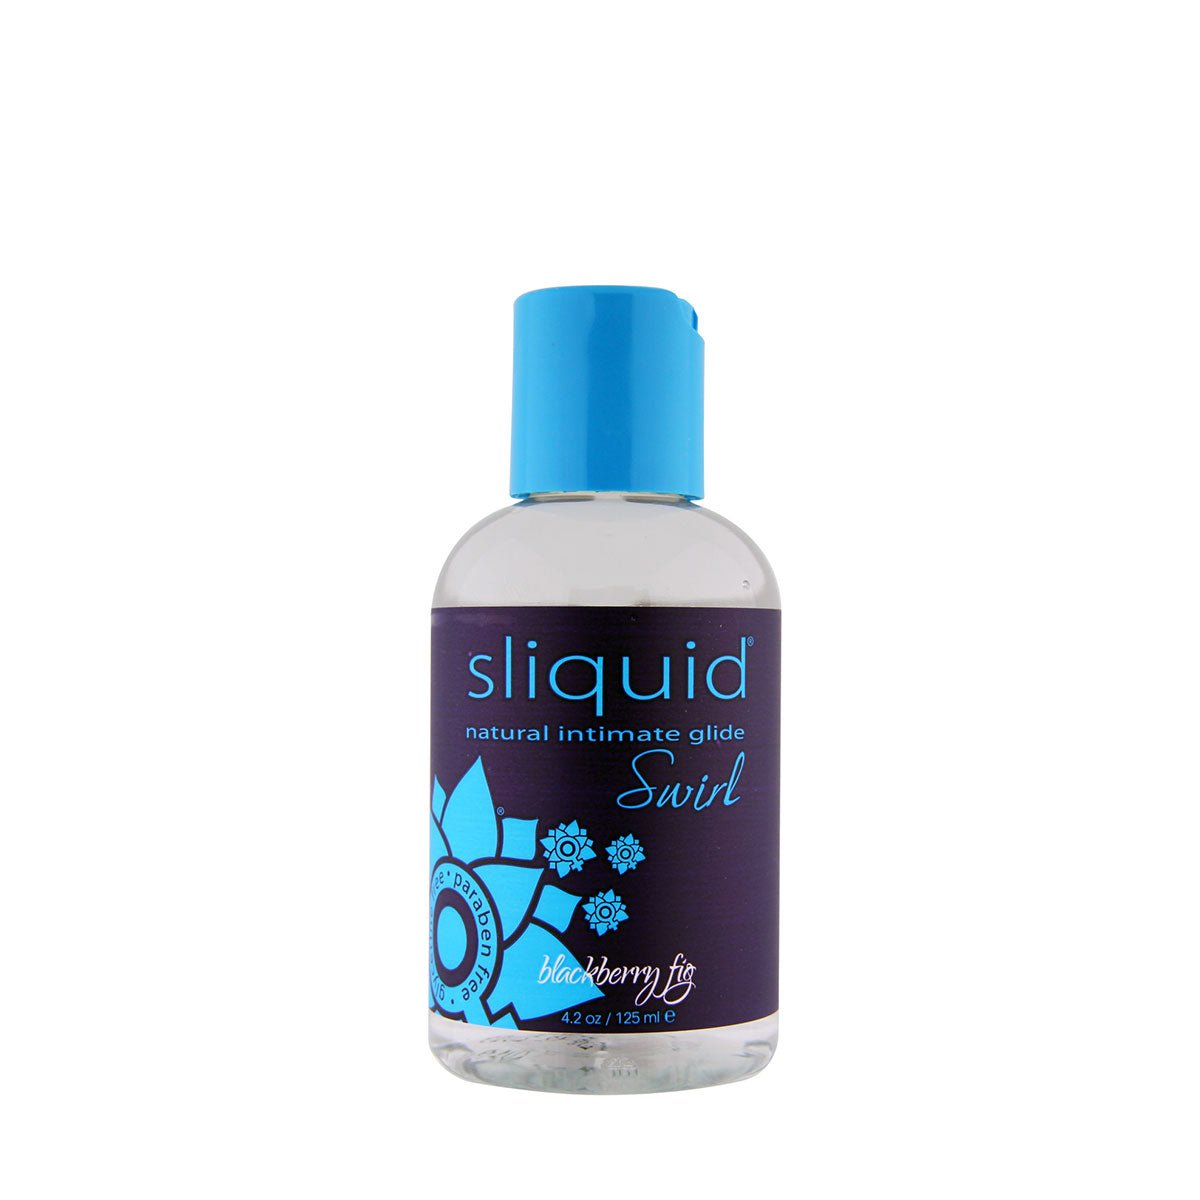 Sliquid Swirl Blackberry Fig 4.2 oz Water Based Lube